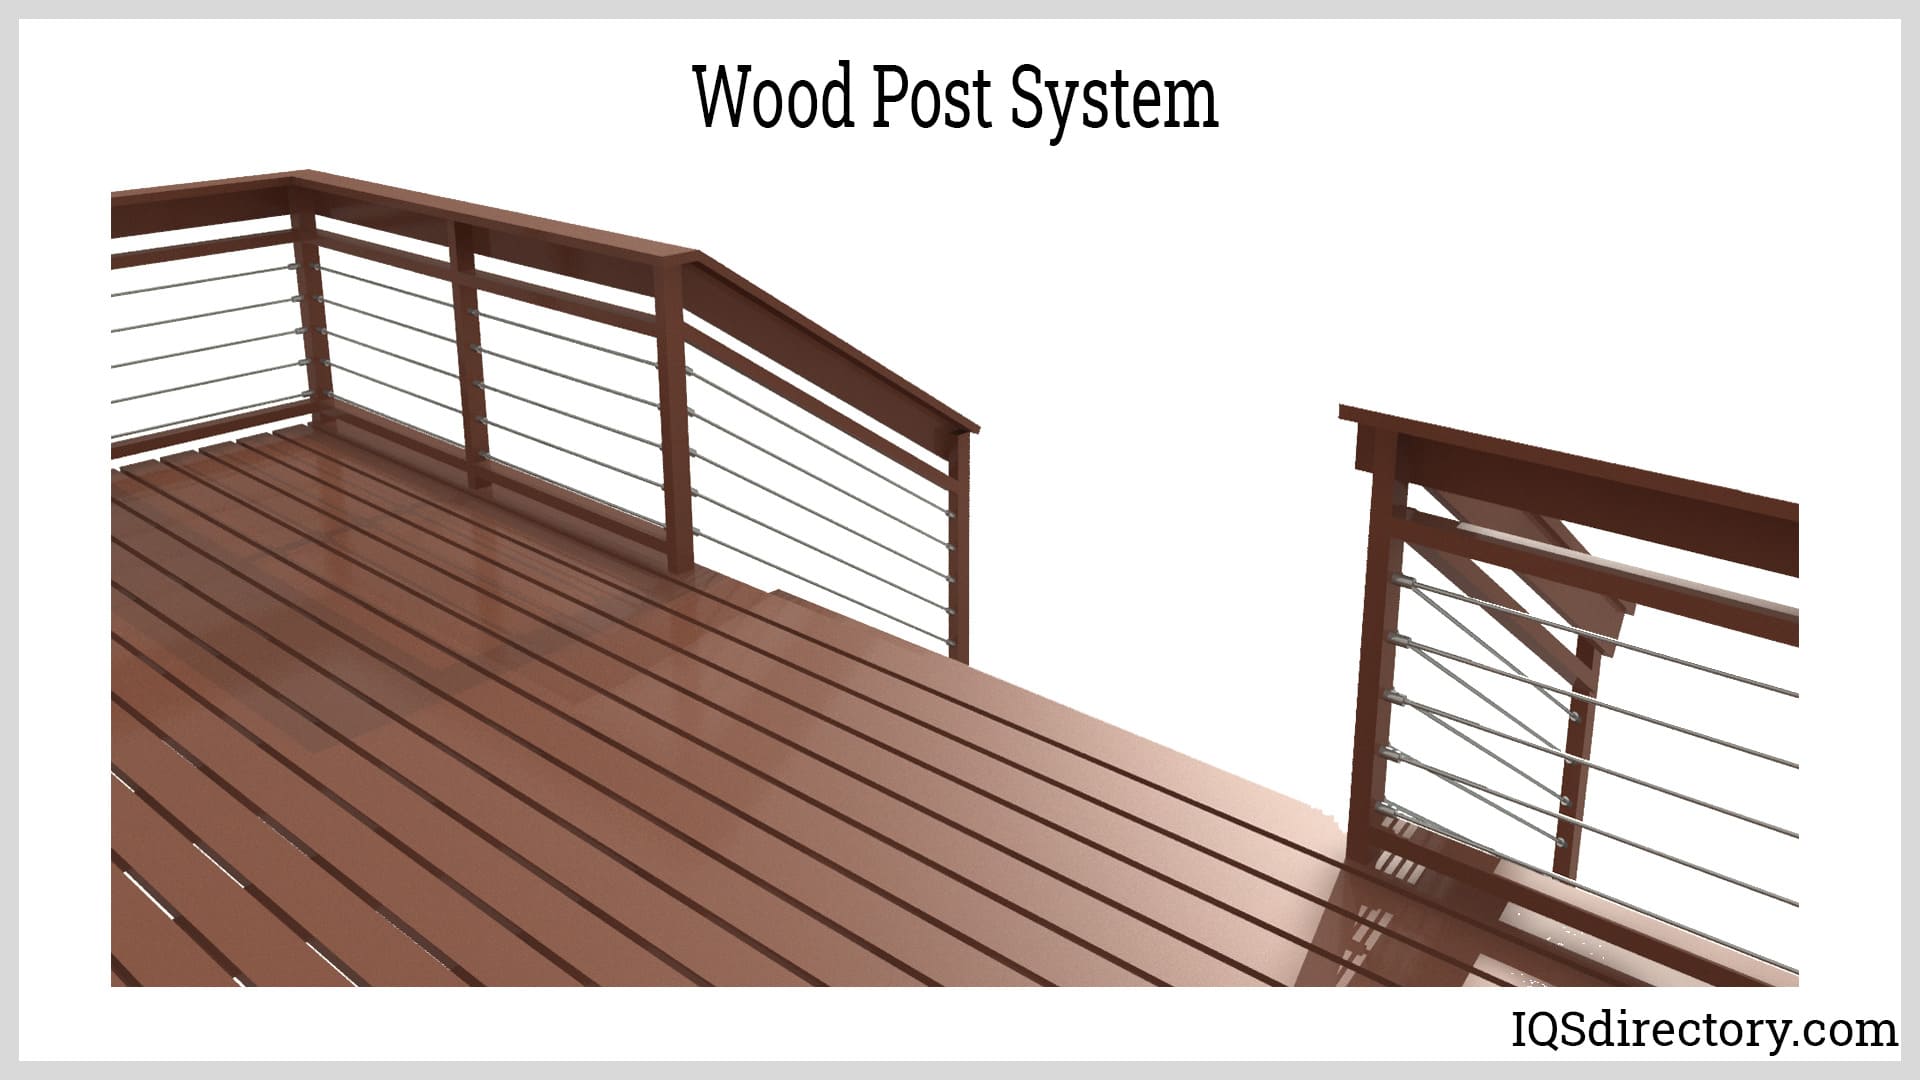 Wood Post System